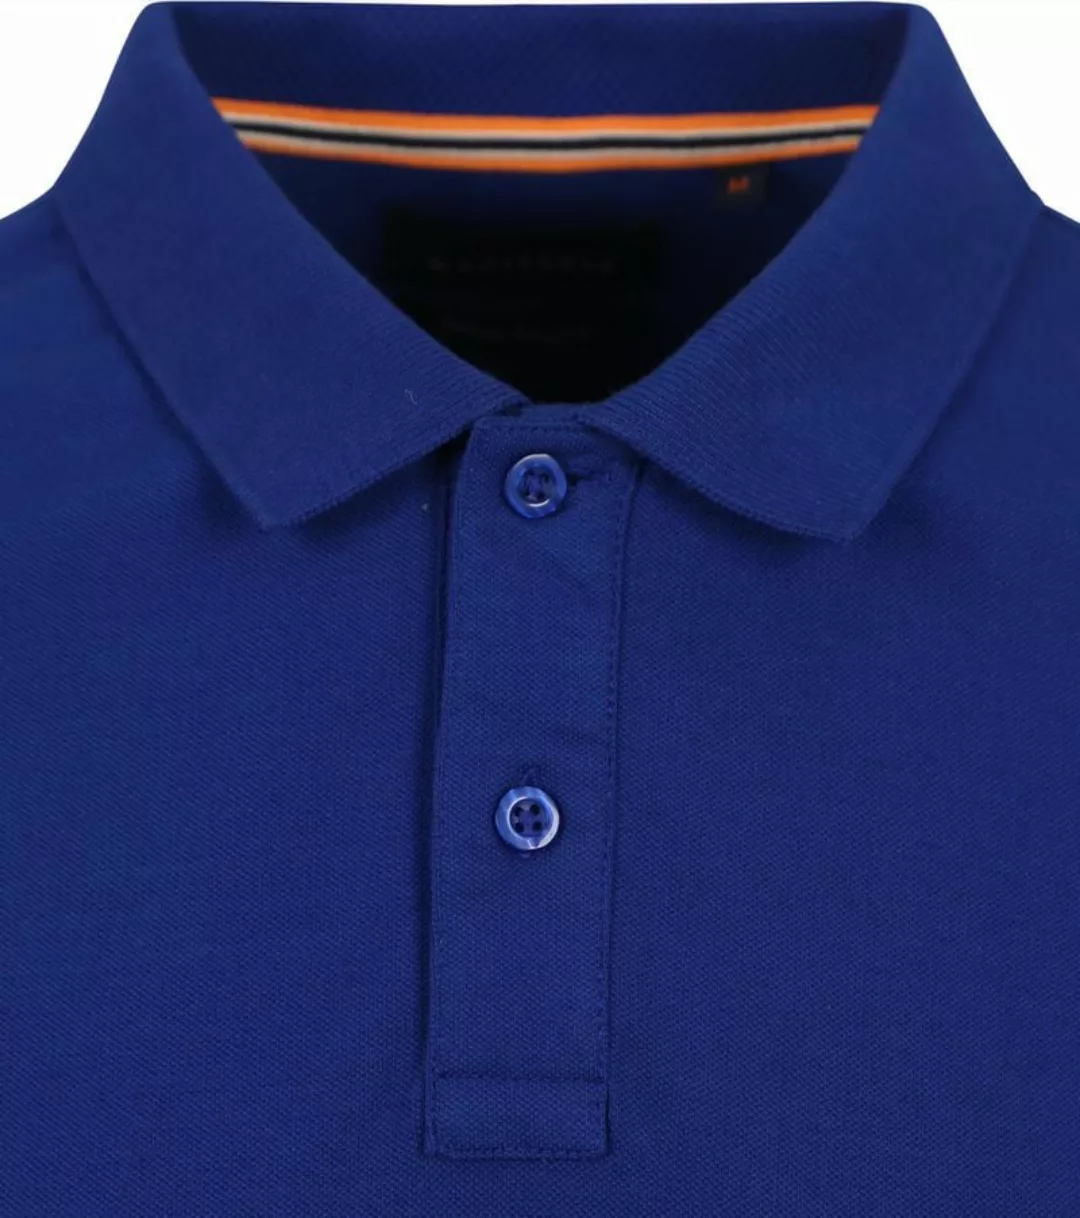 Suitable Cas Poloshirt Royal Blau - Größe 3XL günstig online kaufen